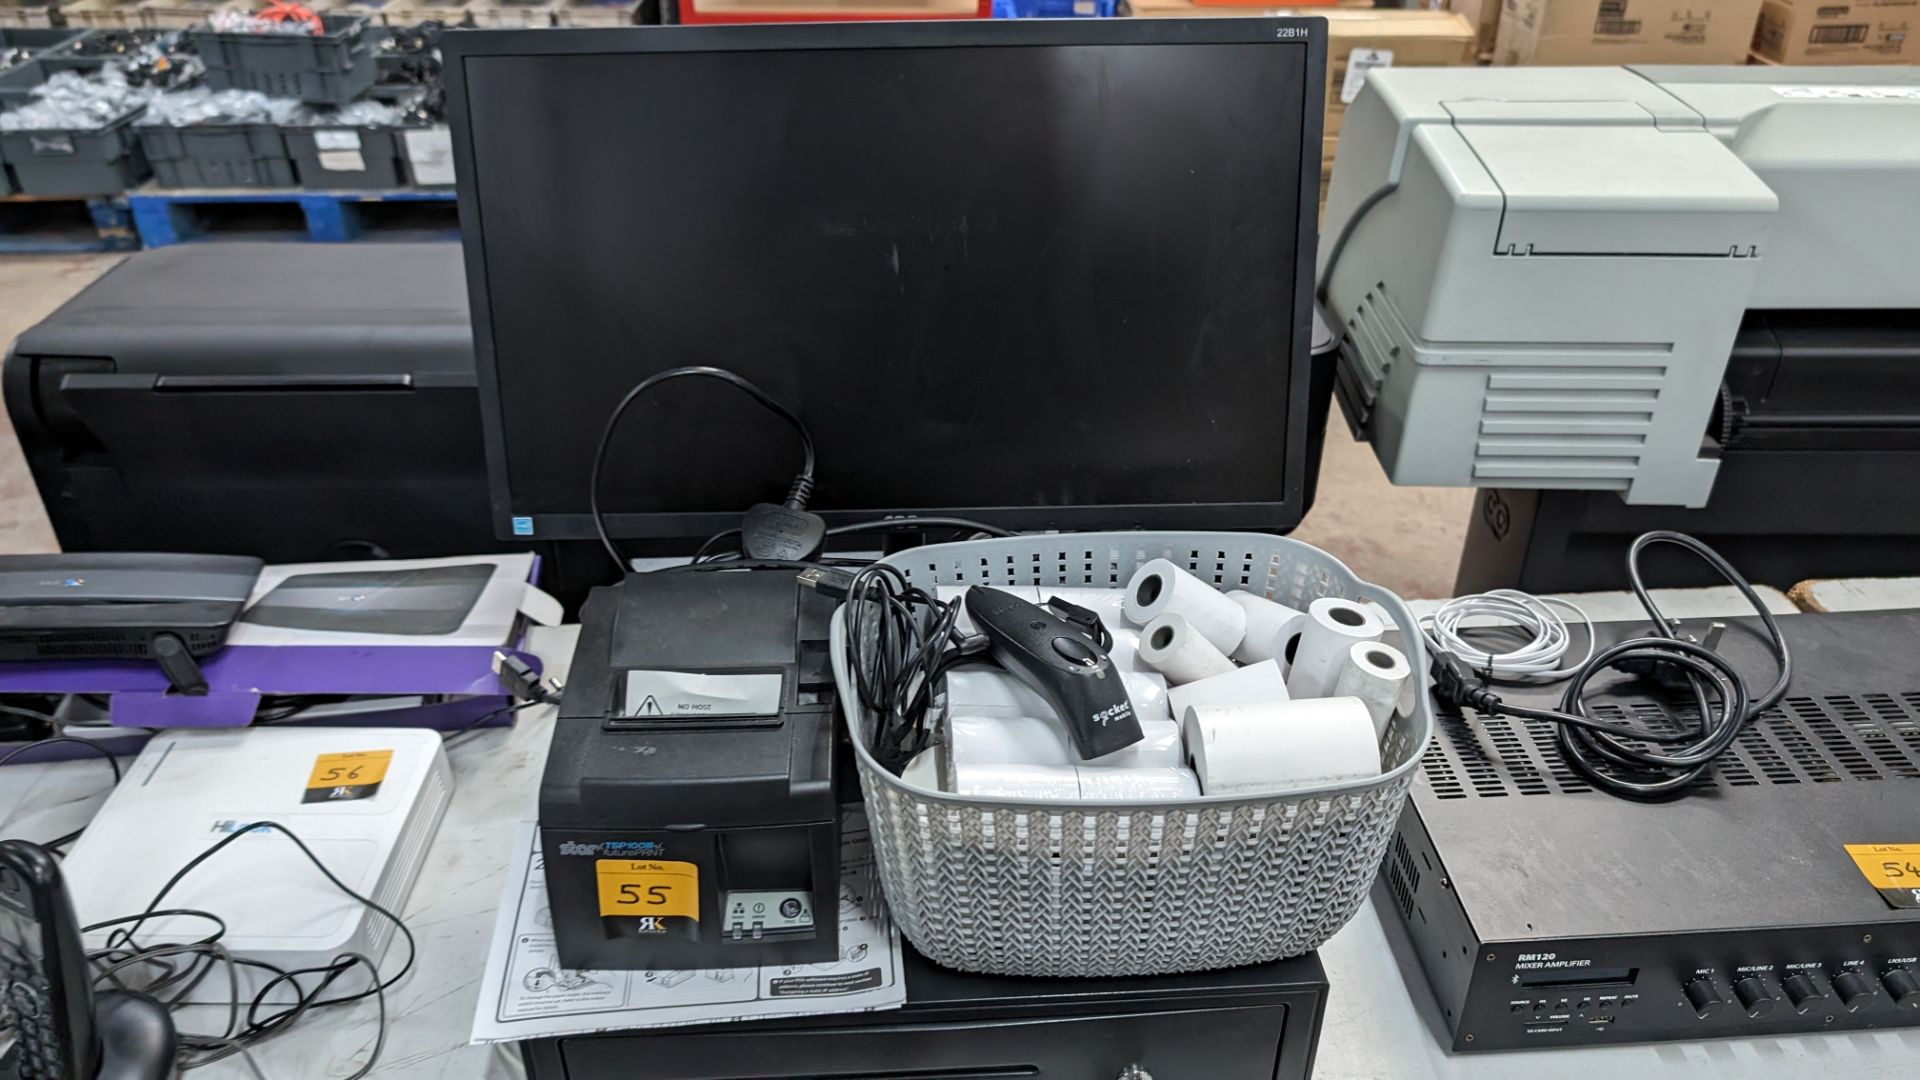 Epos equipment comprising cash drawer, Star thermal receipt printer, quantity of till roll, Socket m - Image 9 of 9